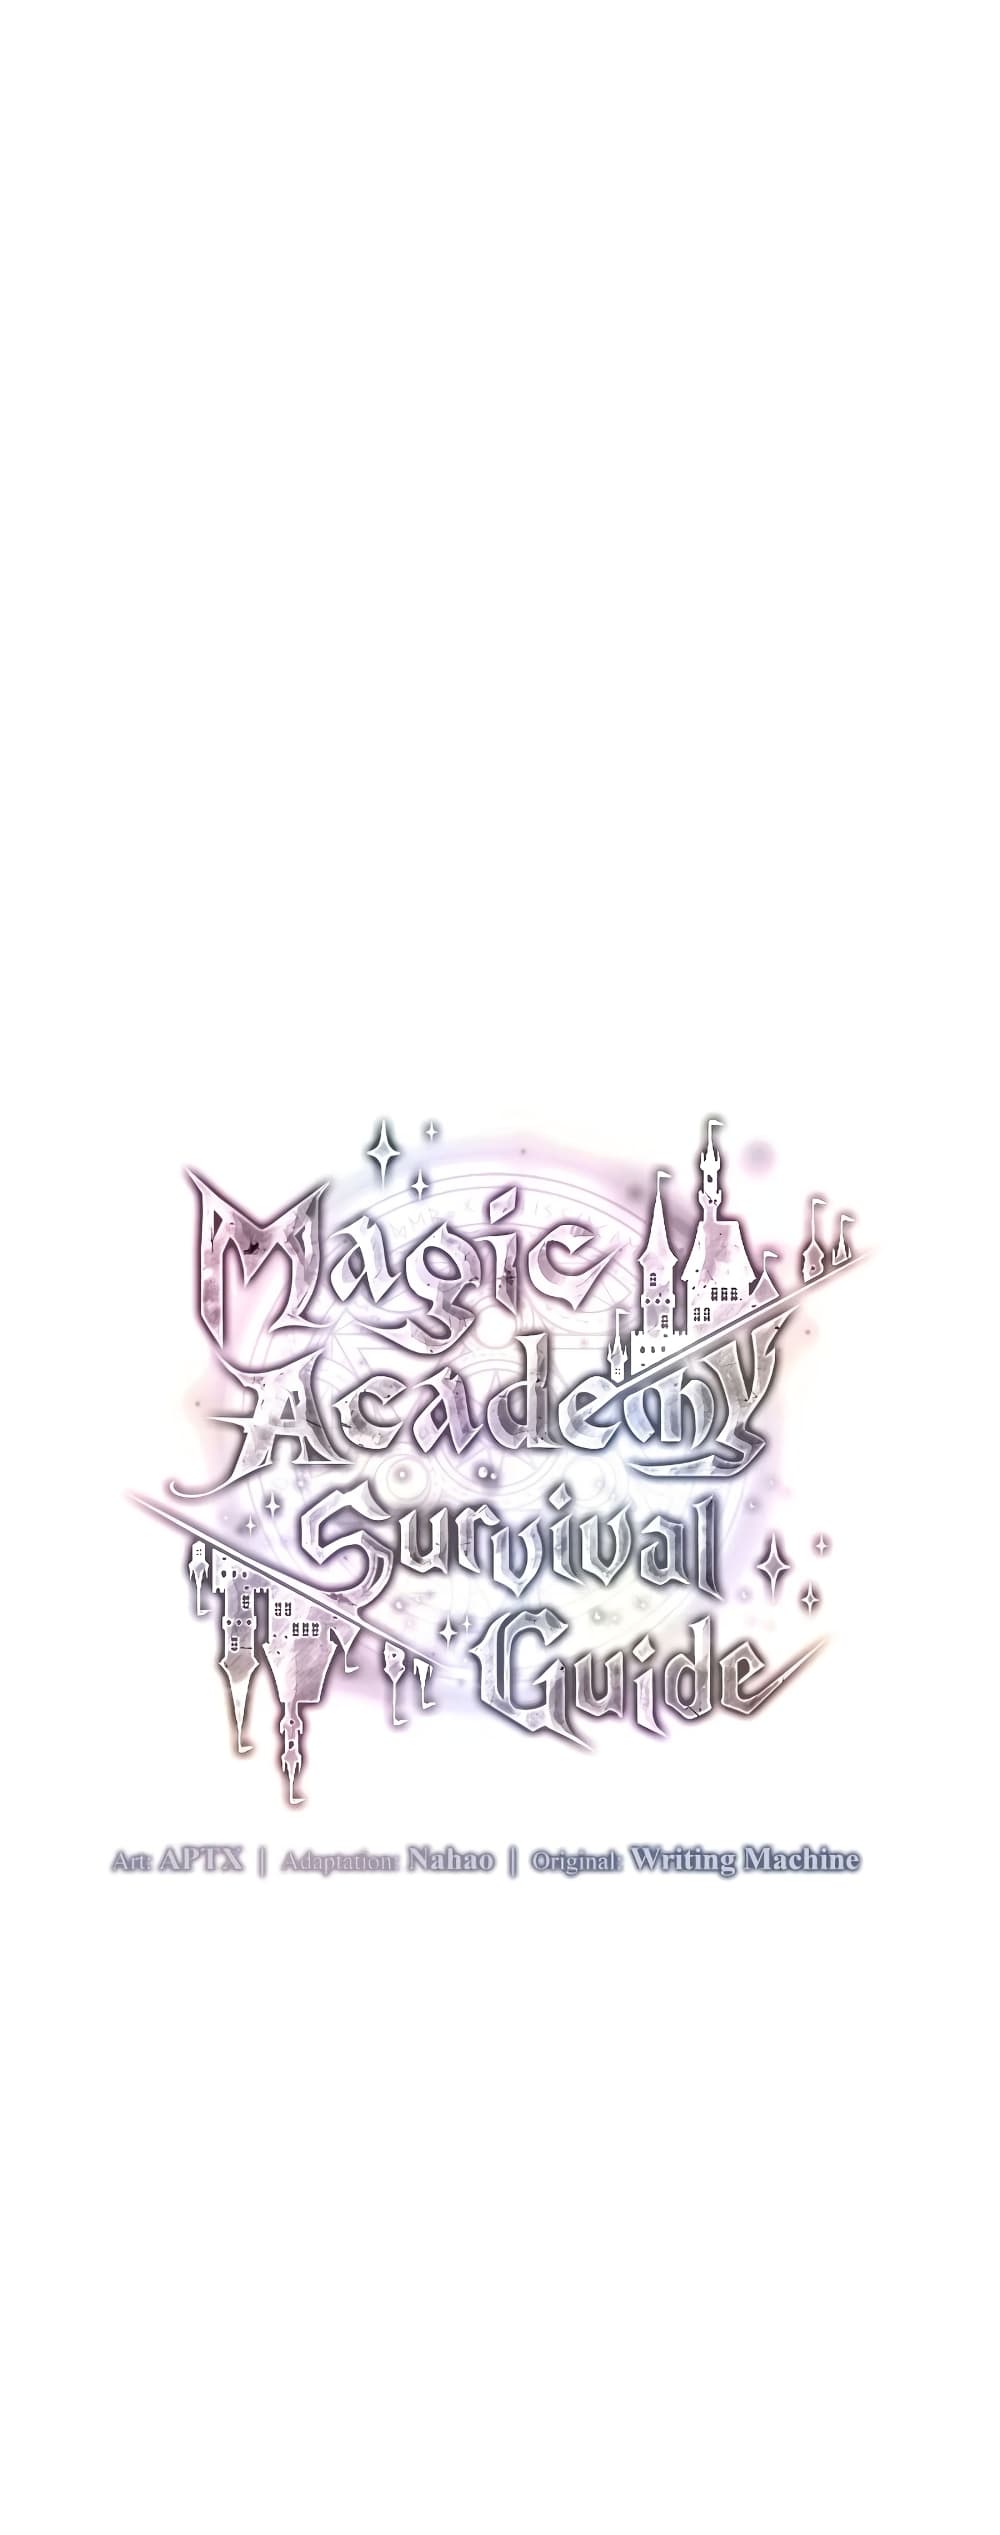 Magic Academy Survival Guide 13-13